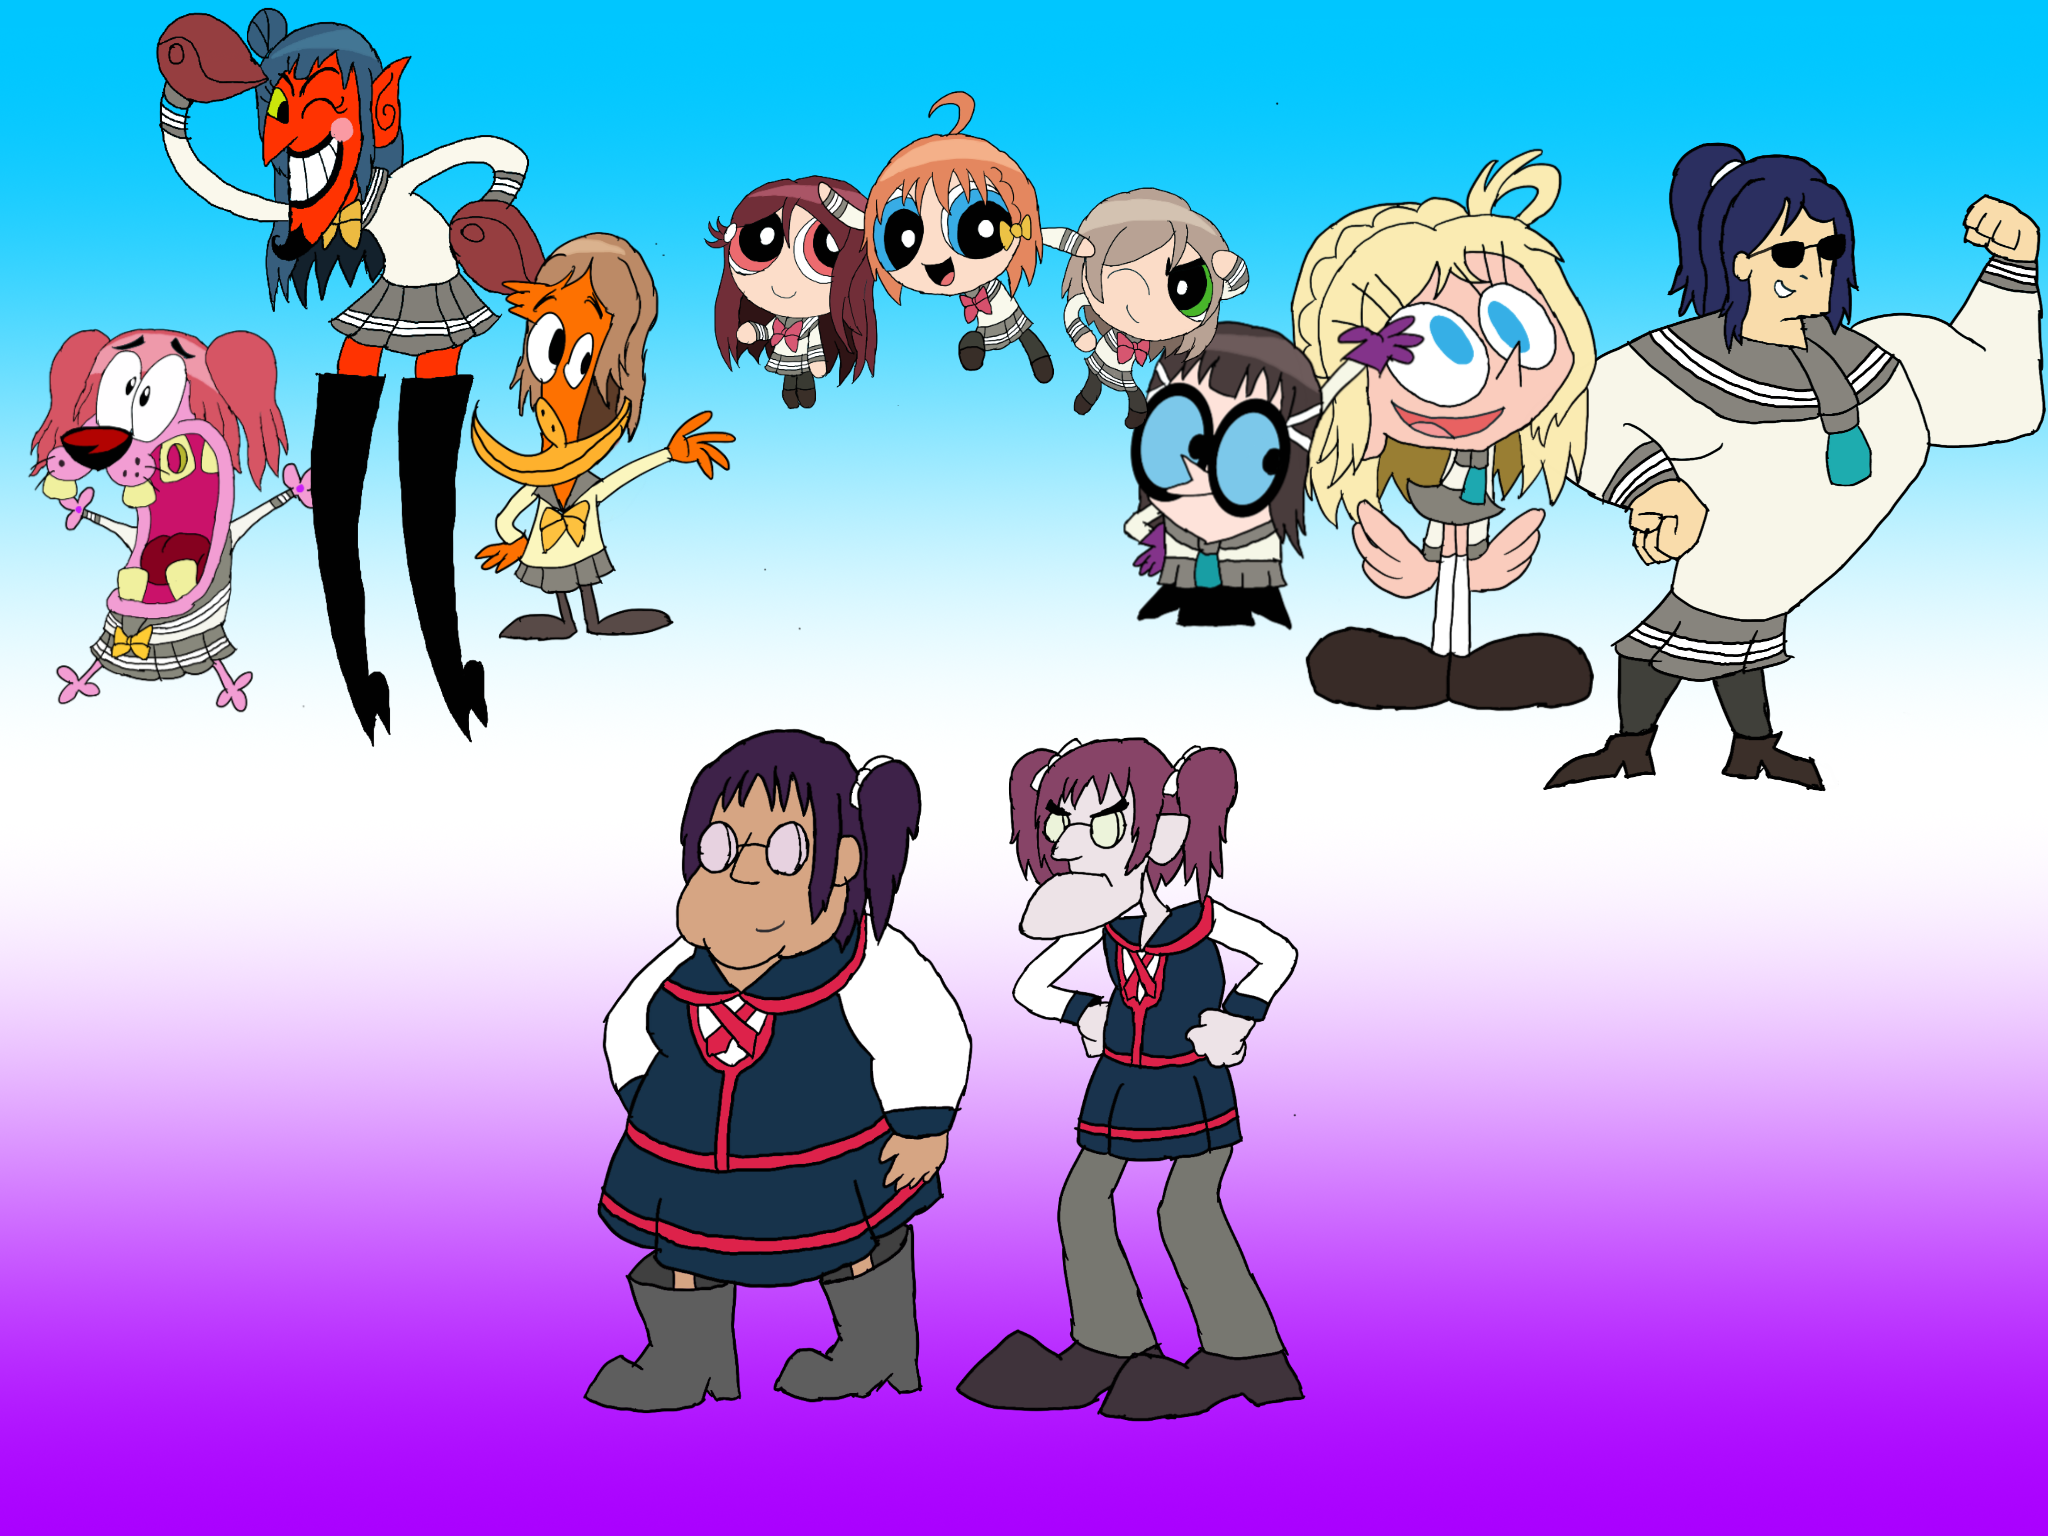 Cartoon Network X Love Live! Sunshine!! by KoopaLive64 on DeviantArt